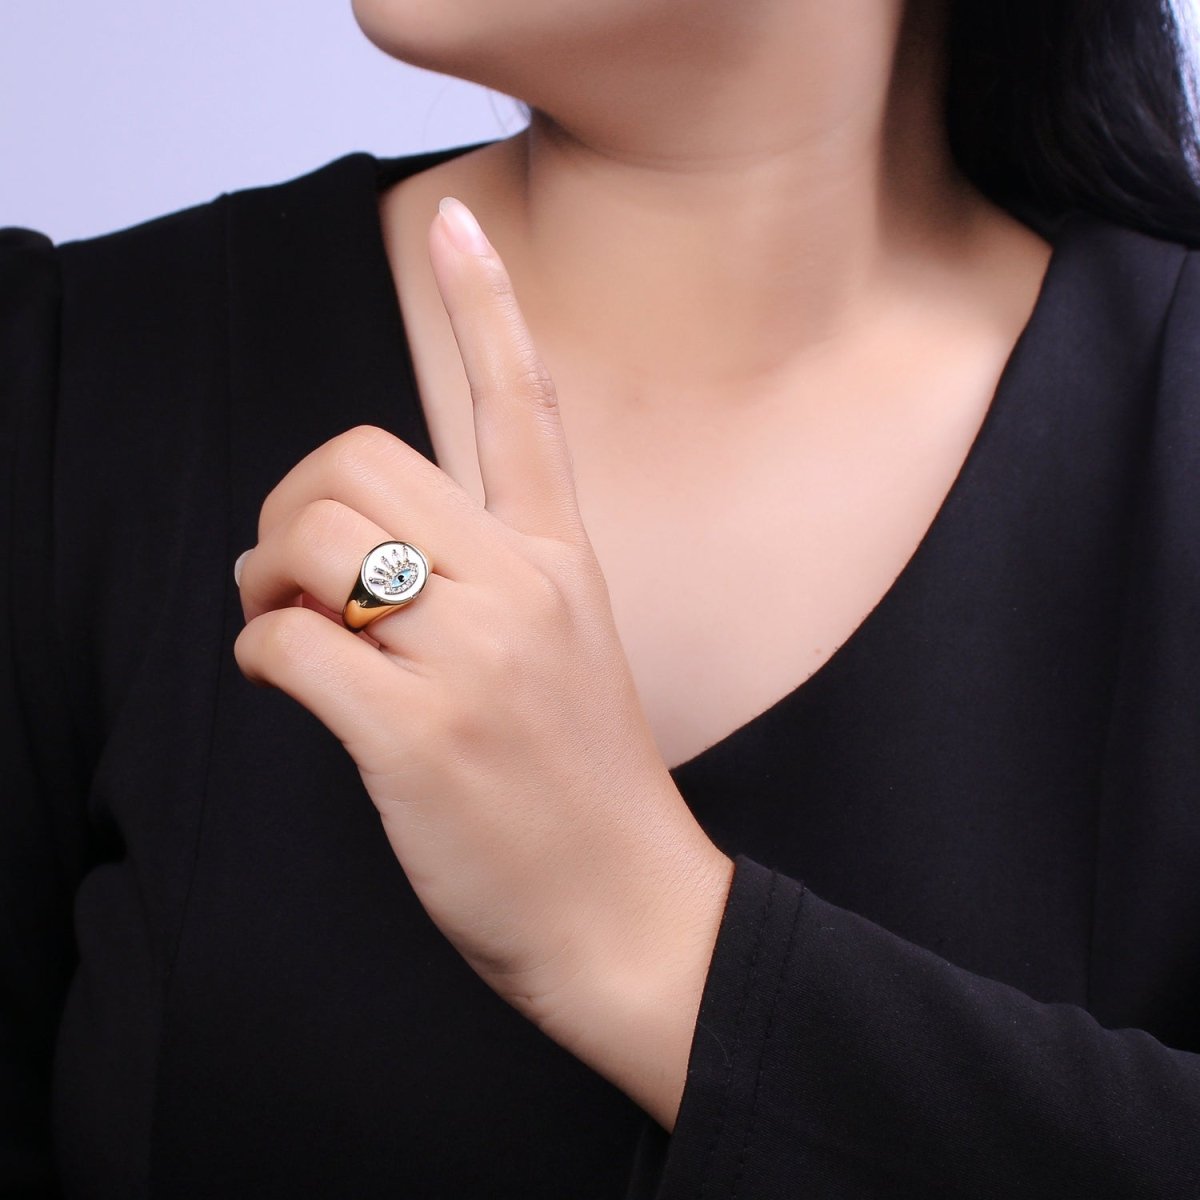 White Dome Evil Eye Ring, Protection Ring, Cubic Zirconia Eye Ring Amulet Boho Statement Jewelry U-201 ~ U-206 - DLUXCA